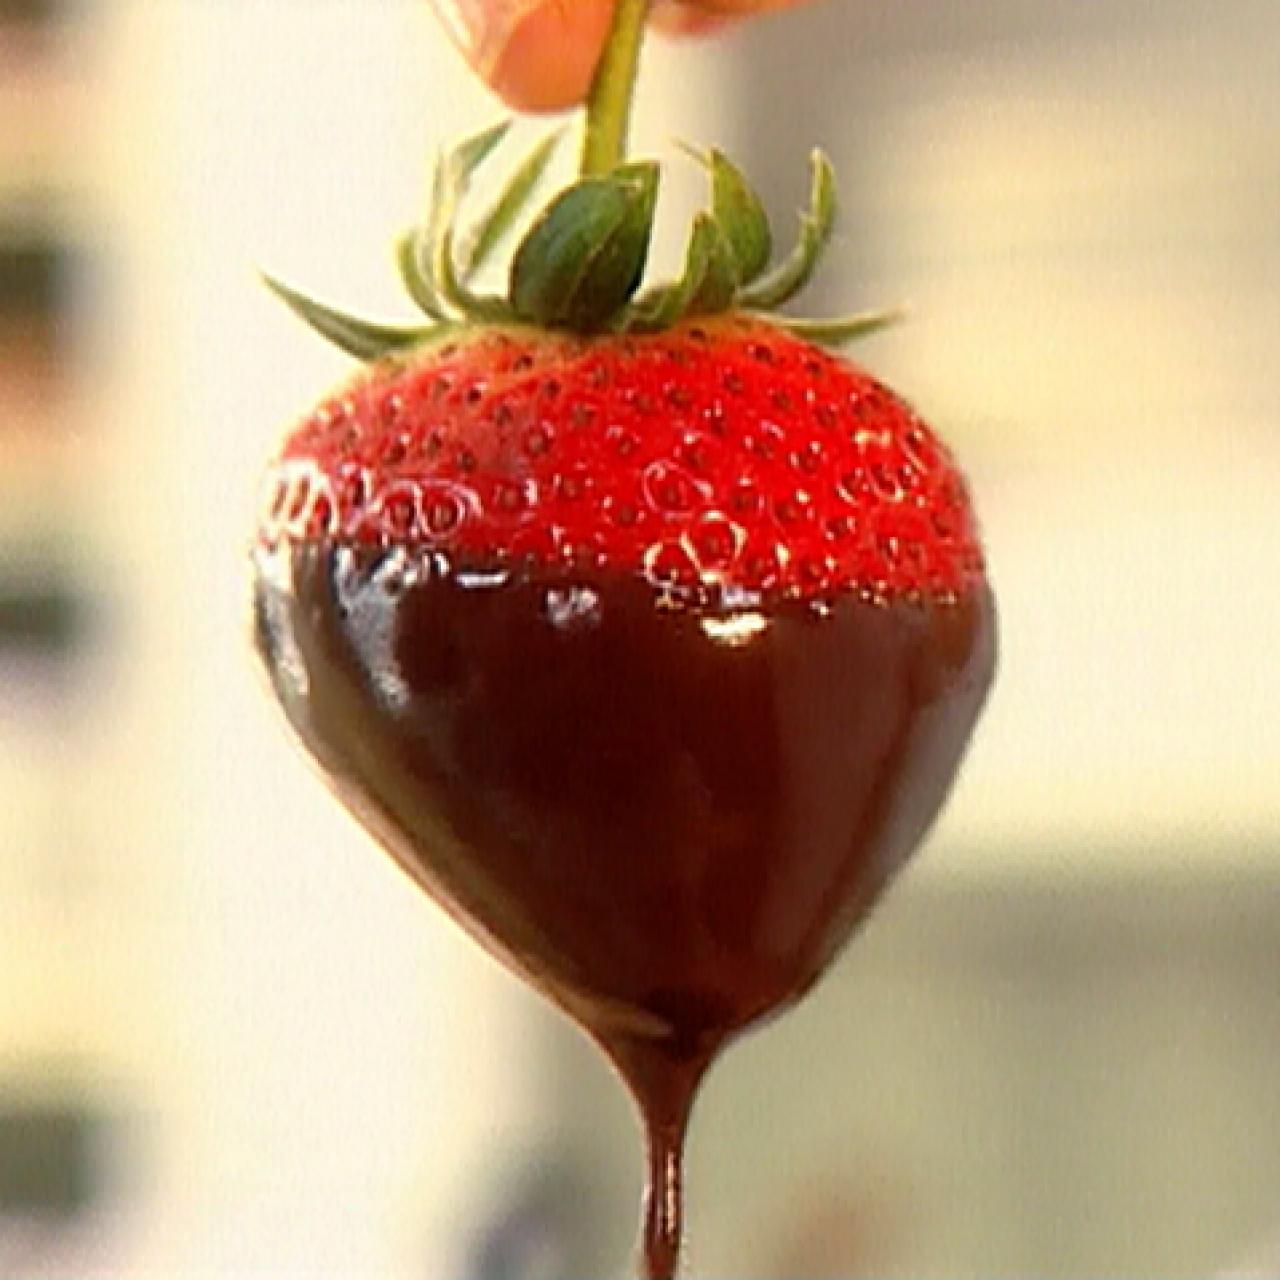 Best Chocolate Covered Strawberries Recipe - How to Make Chocolate-Covered  Strawberries